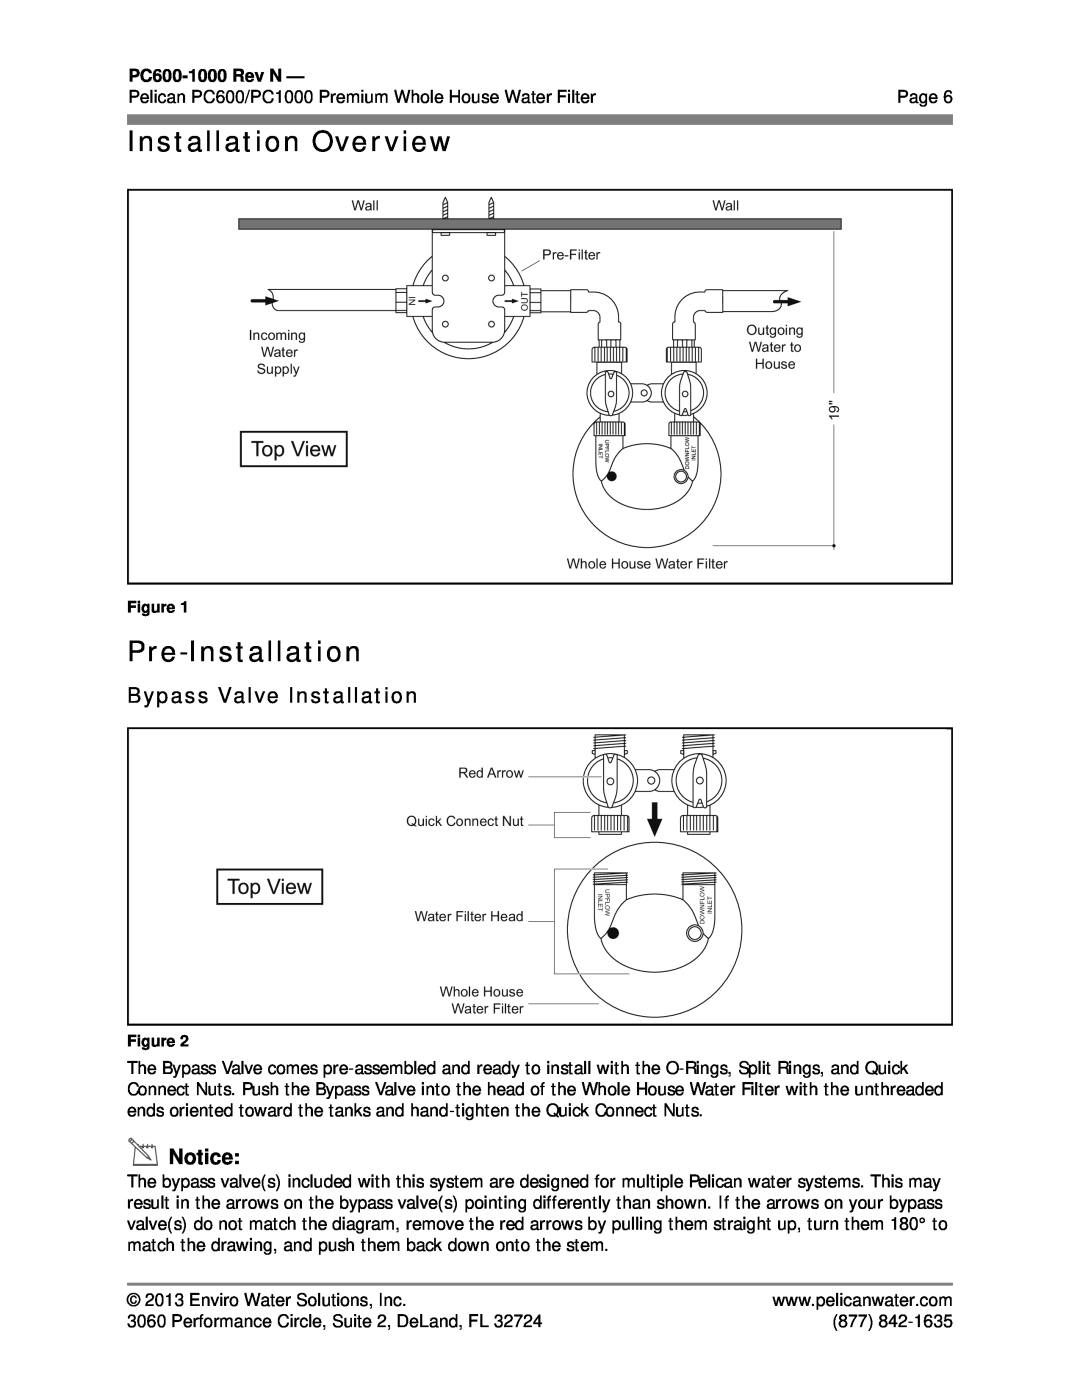 Pelican manual Installation Overview, Pre-Installation, Bypass Valve Installation, PC600-1000Rev N 